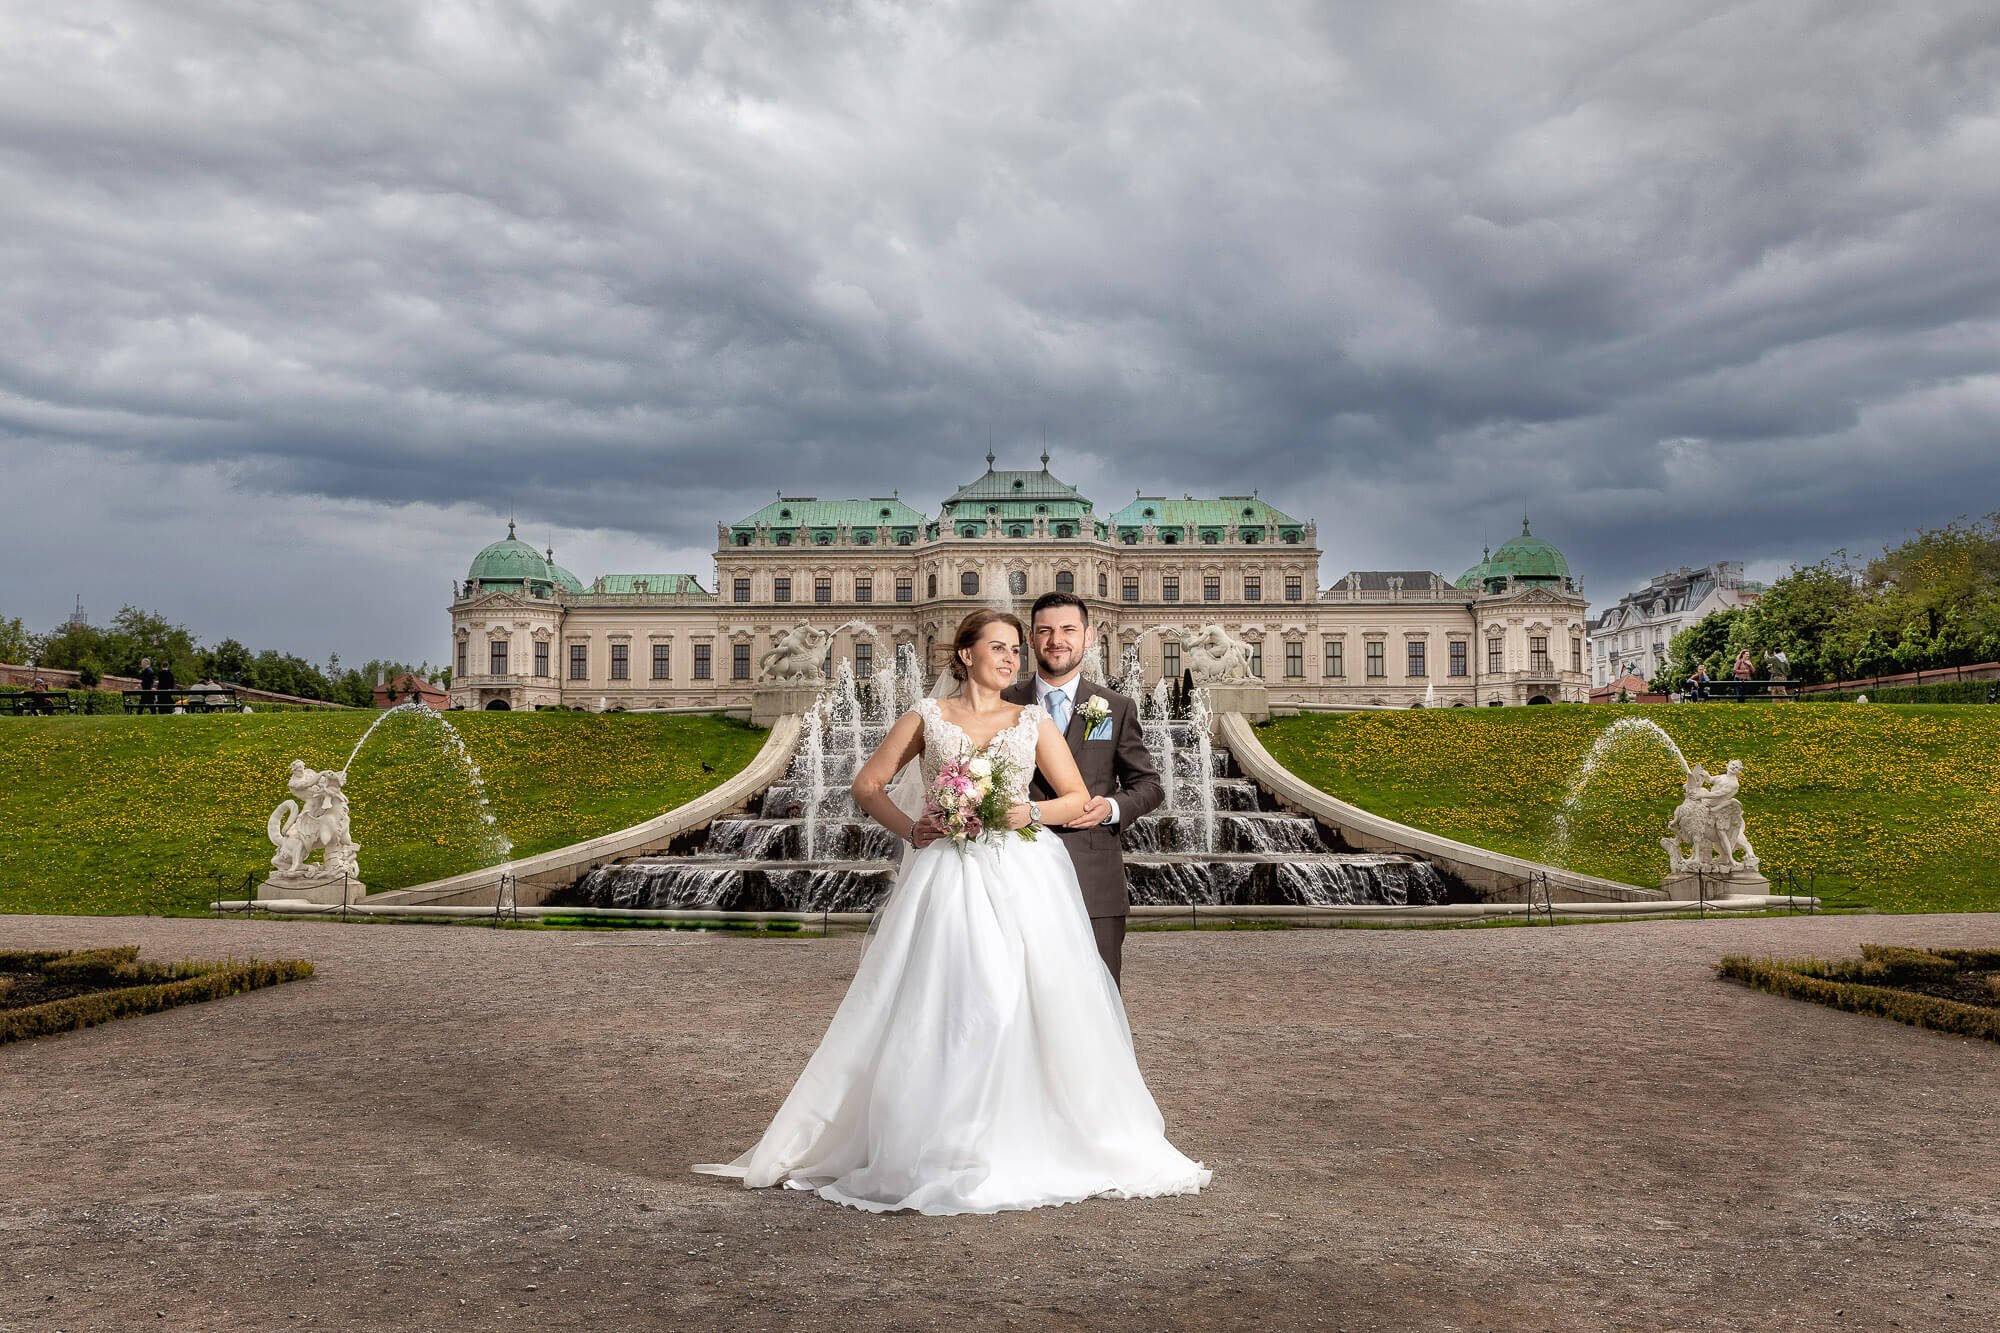 Wedding photographer Vienna, Belvedere Palace